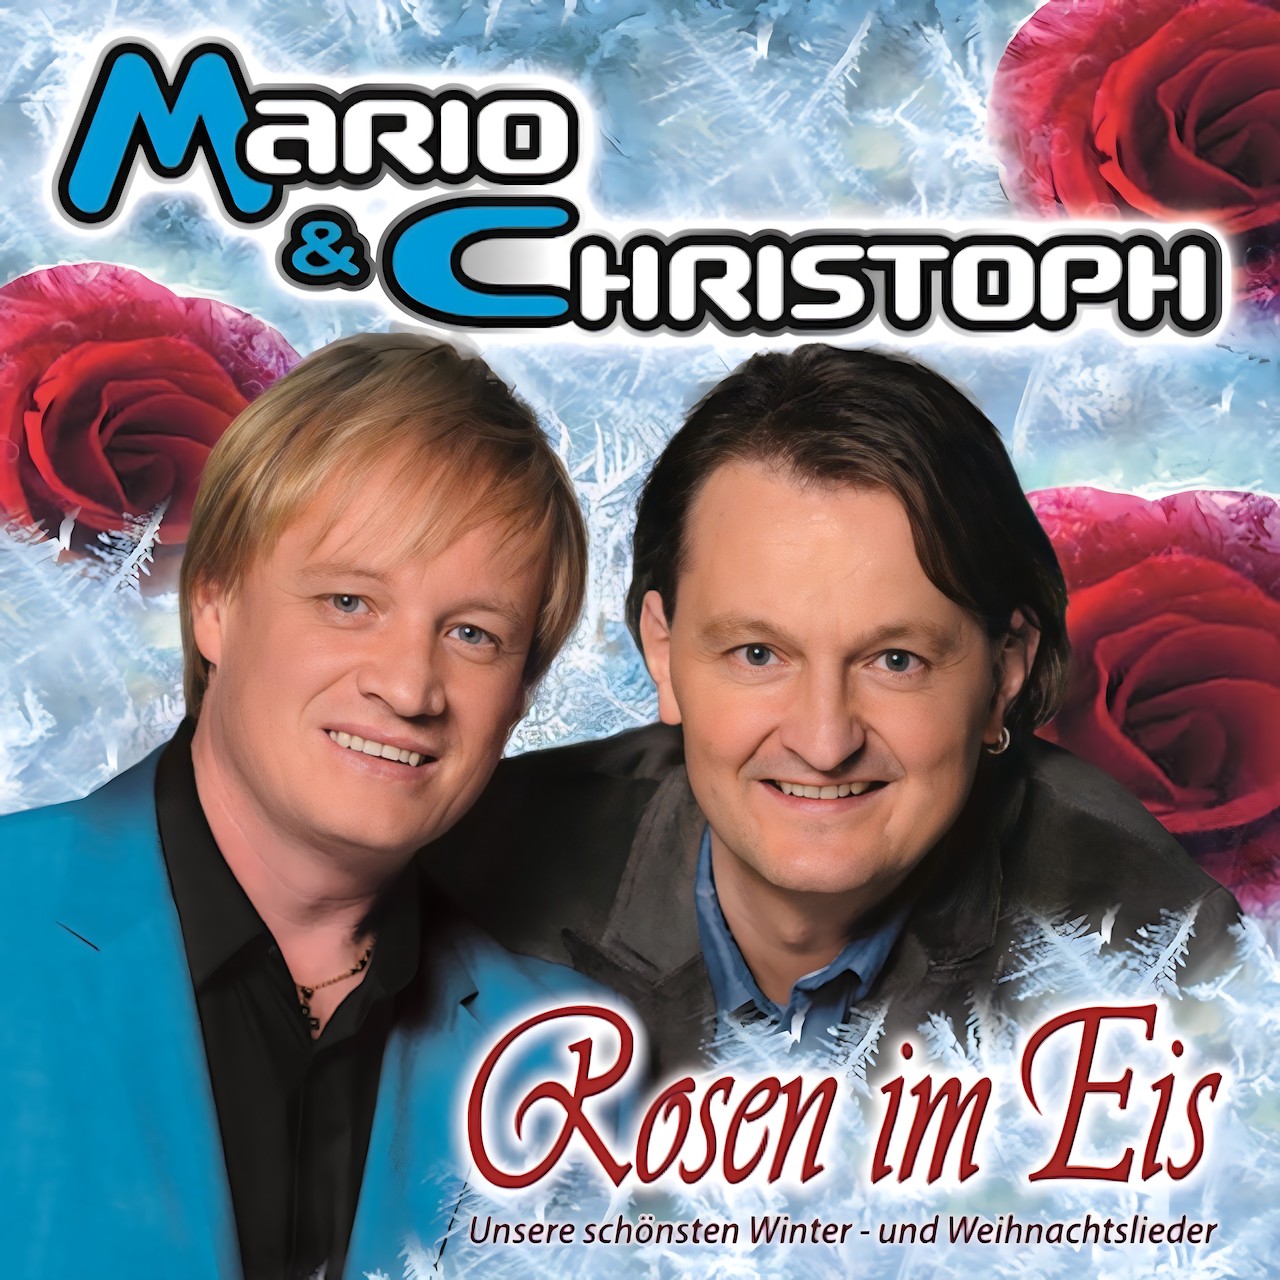 Mario Christoph ROSEN IM EIS Cover remini enhanced 1280x1280